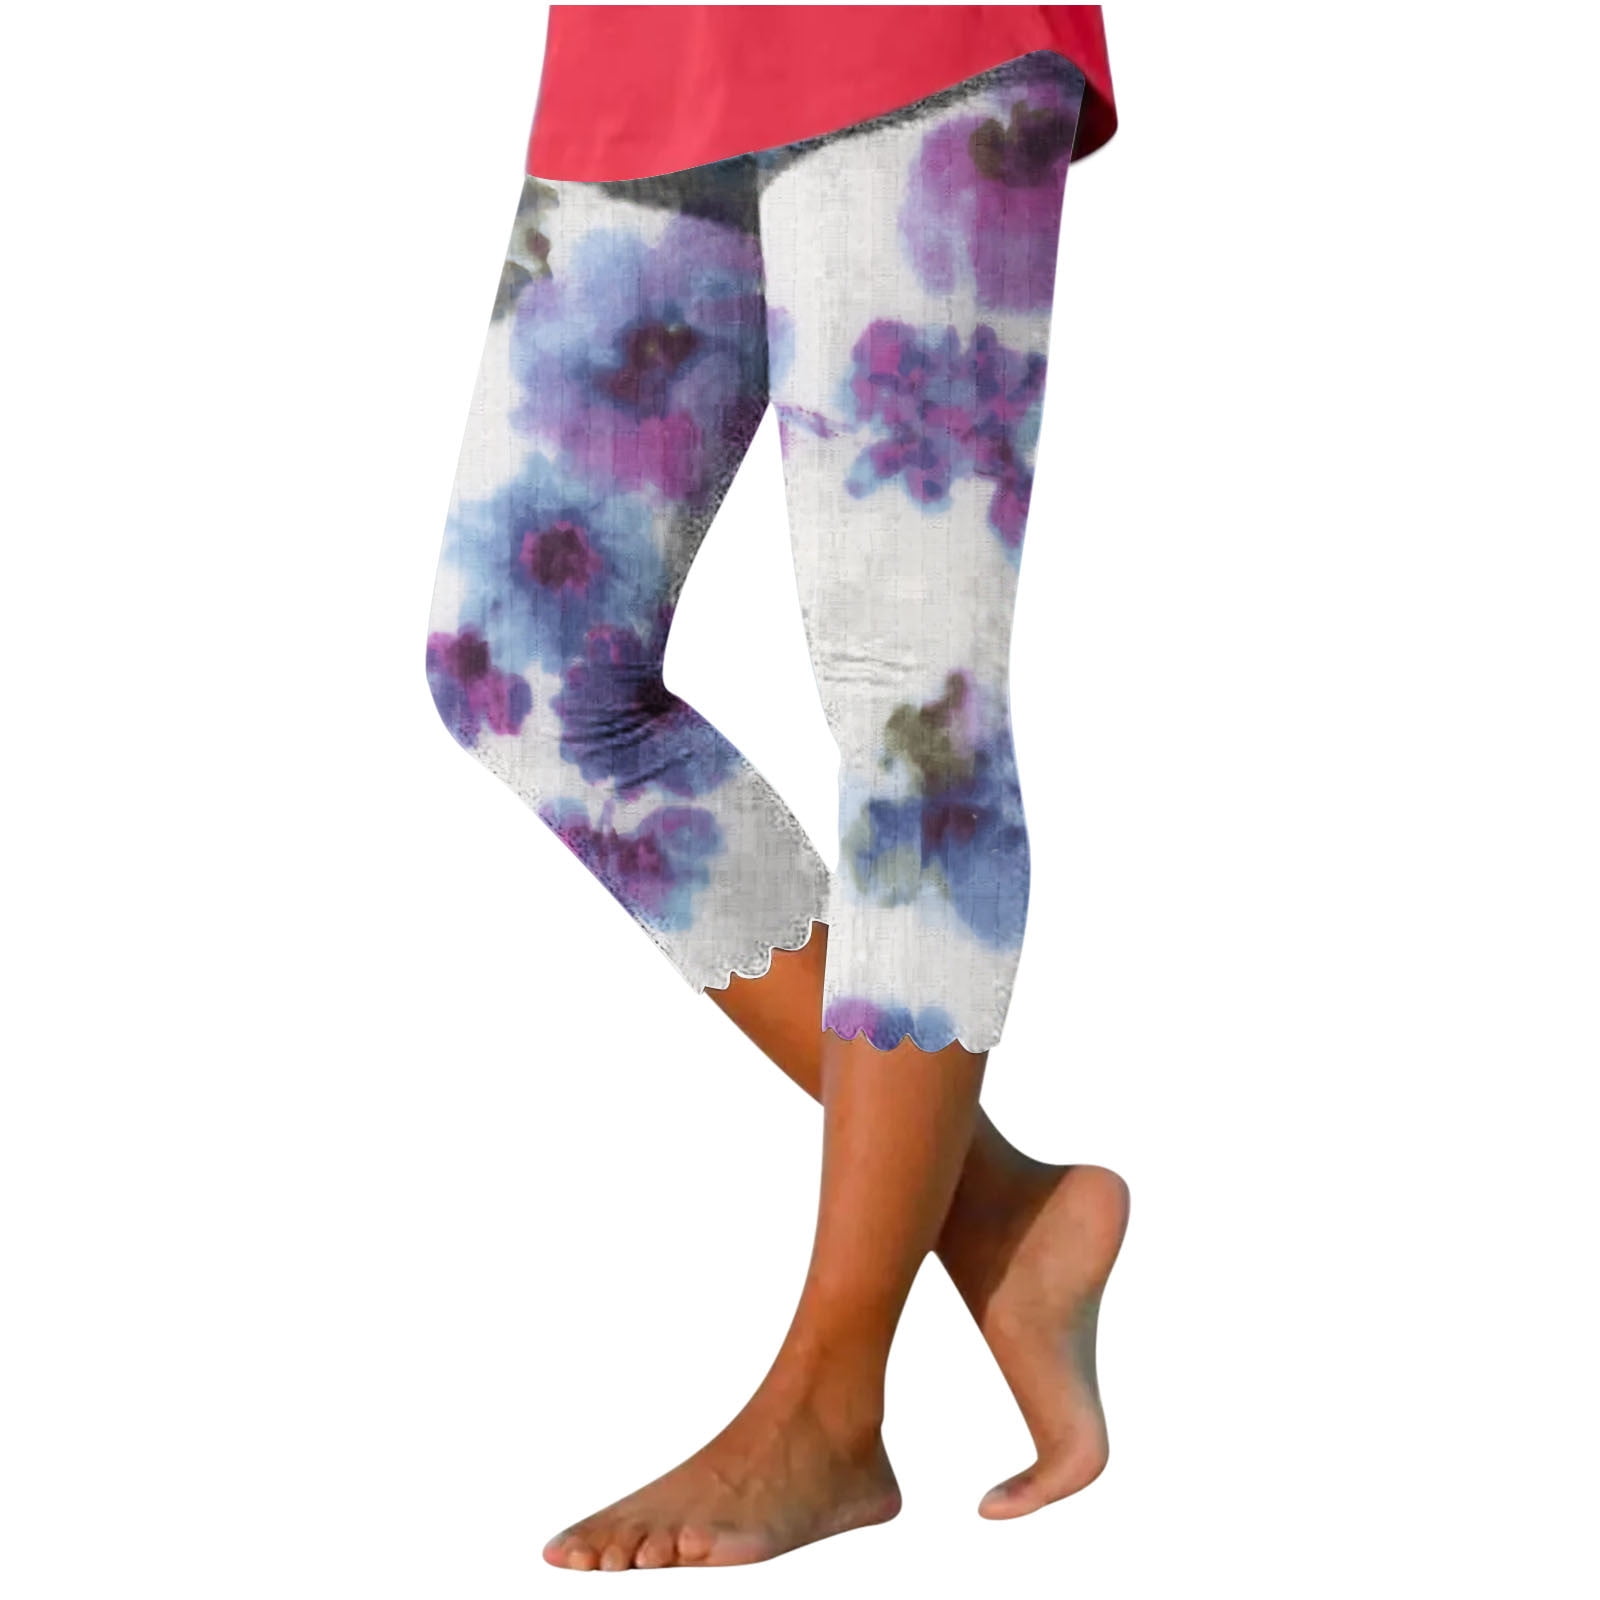 Ladies Stretch Capri Leggings Under Tunic Tops and Dress Graphic